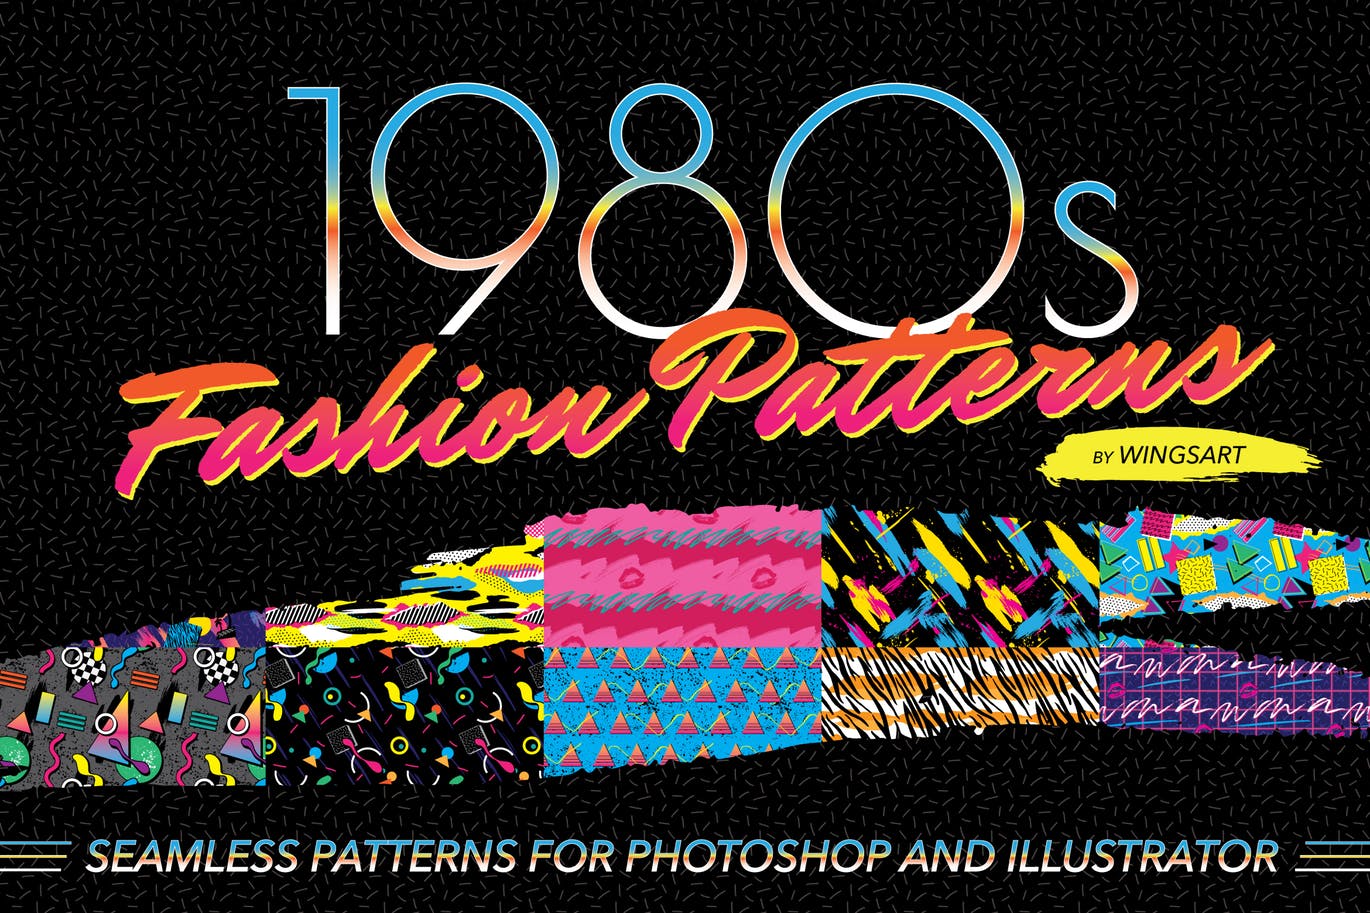 1980s年代复古潮流时尚图案设计素材v1 1980s Fashion Patterns Volume One插图